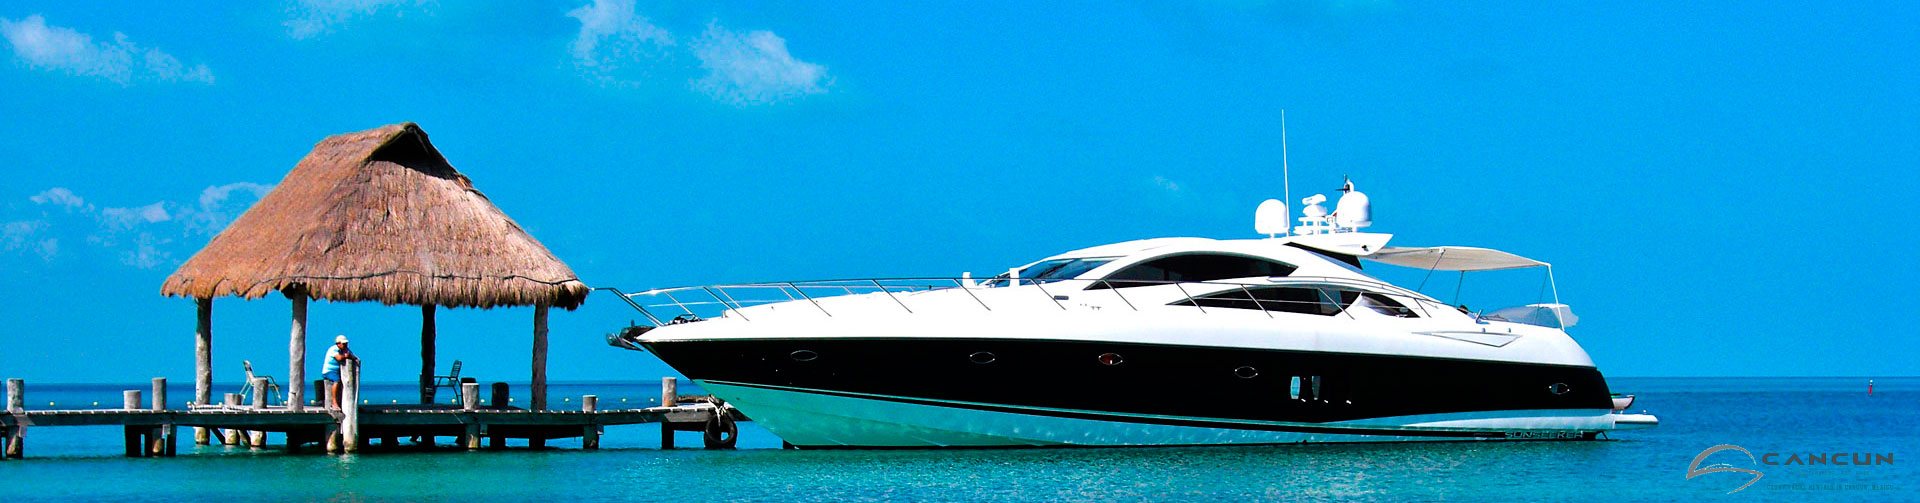 cancun luxury yachts